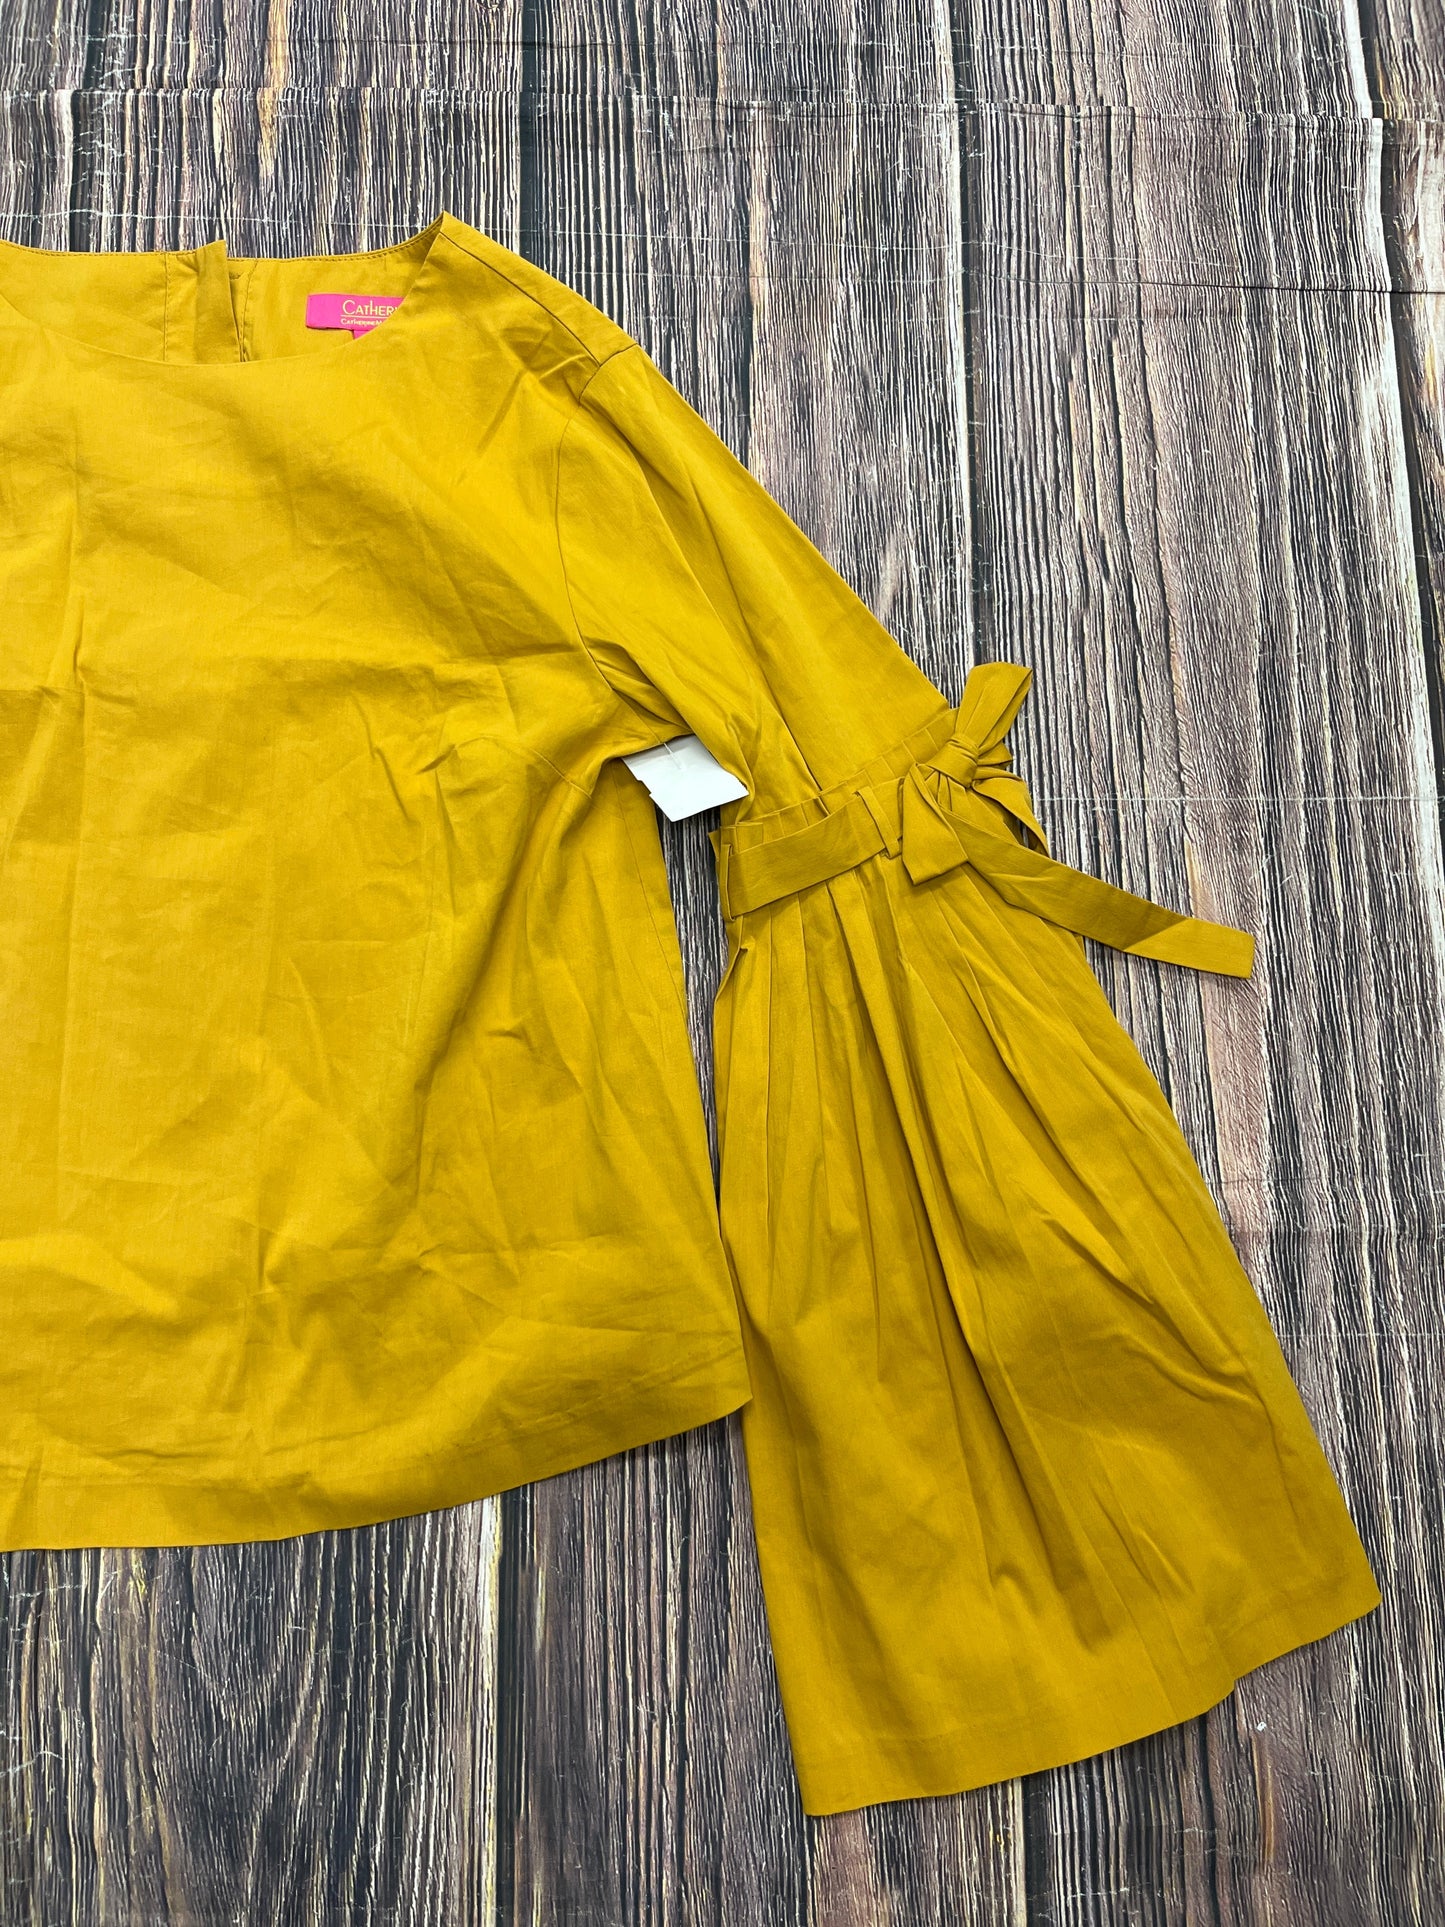 Yellow Top Long Sleeve Catherine Malandrino, Size Xs